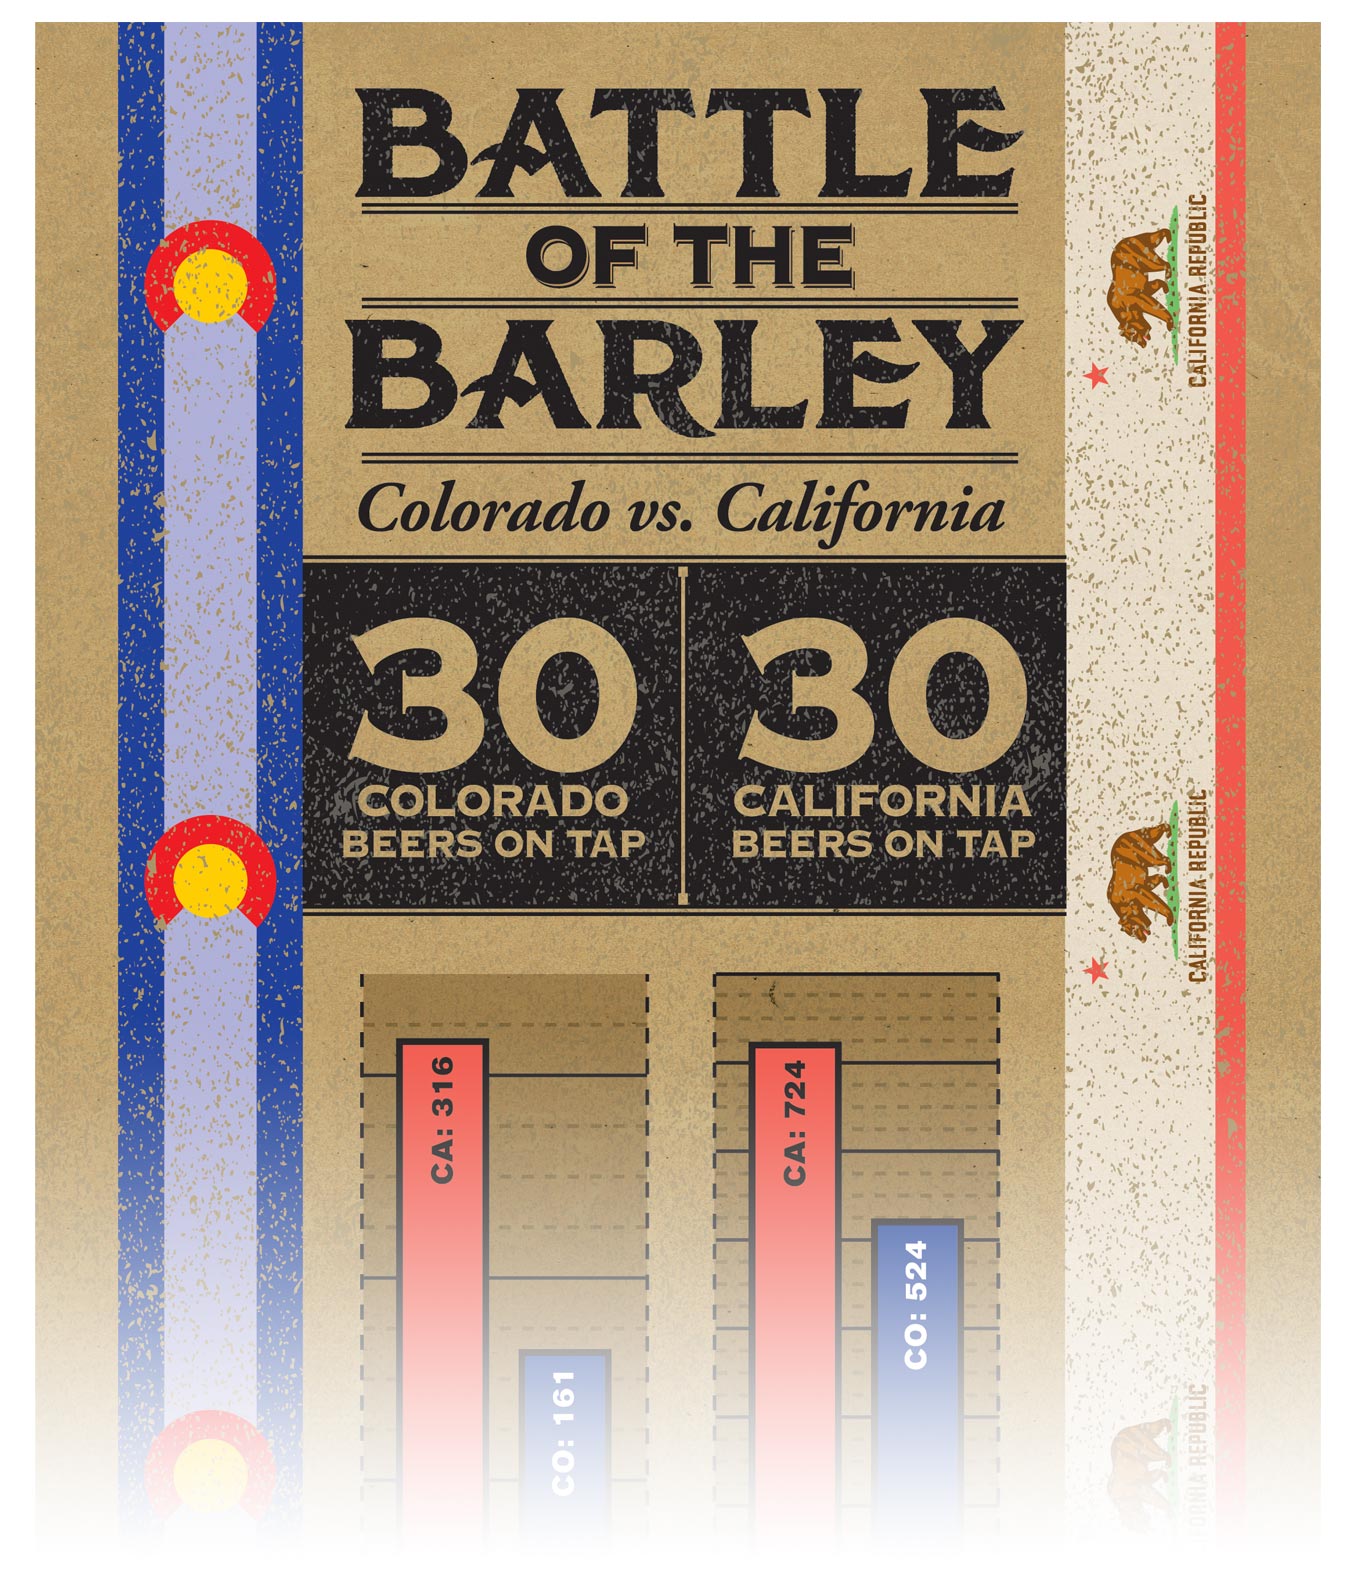 Rackhouse-Pub-Battle-of-the-Barley-2013-mobile